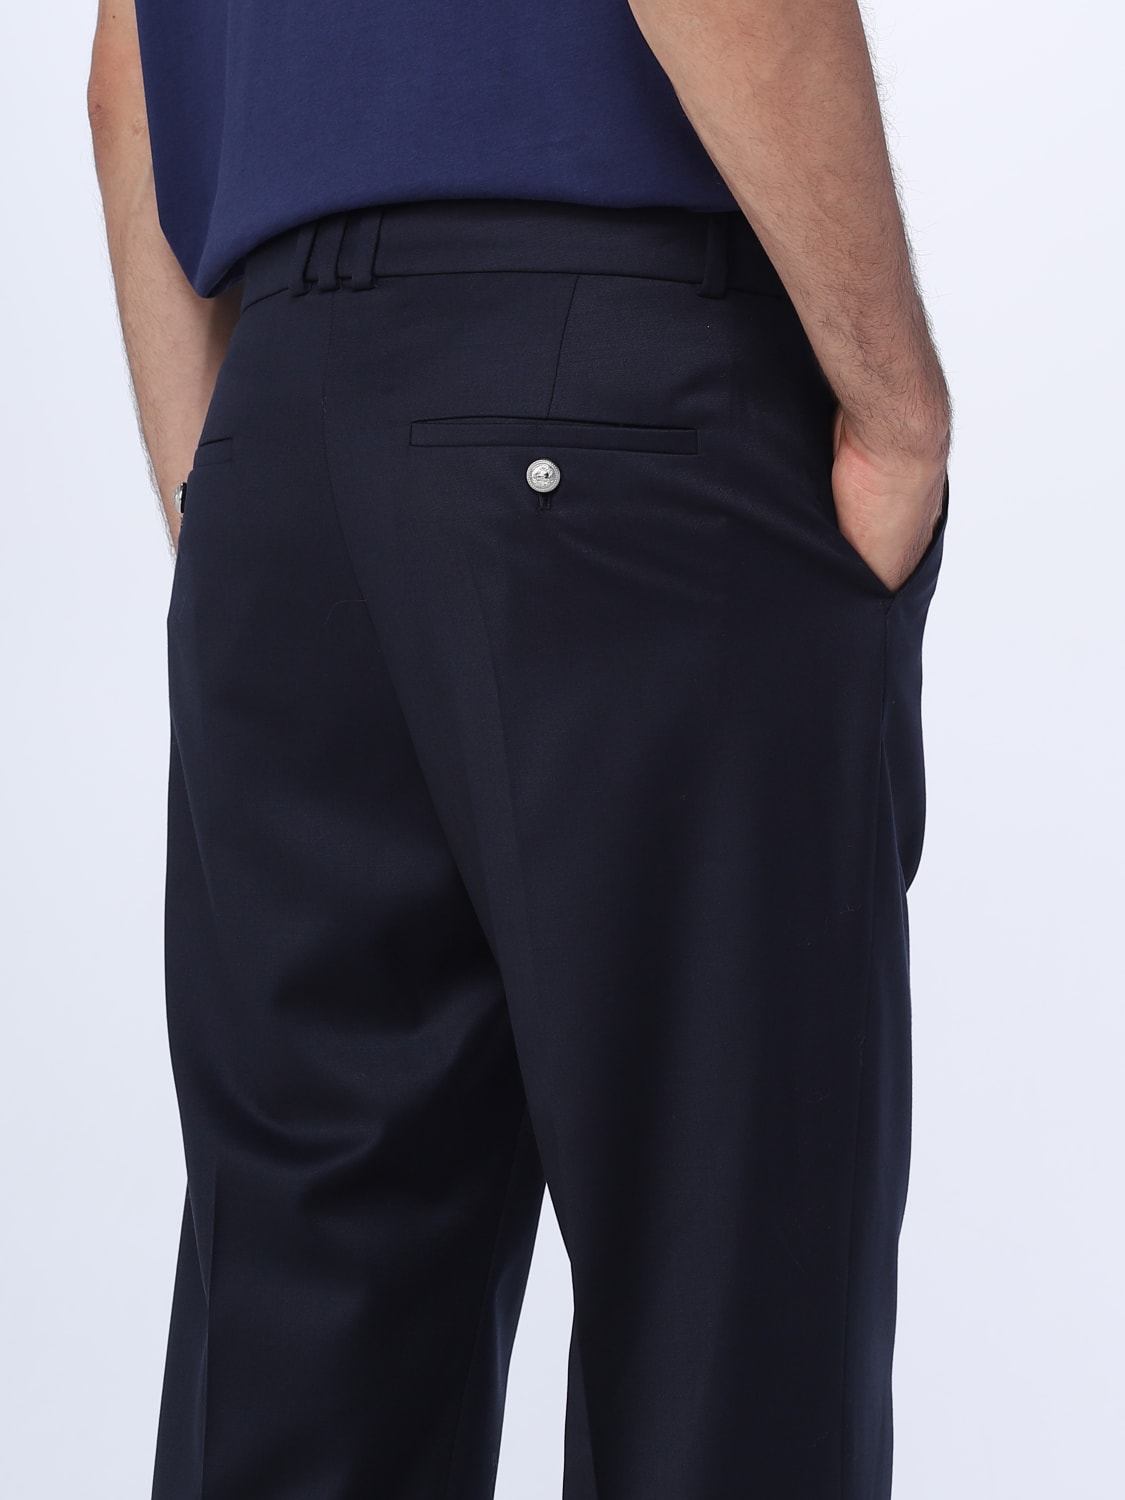 trimme Milliard Gammel mand BALMAIN: pants for man - Black | Balmain pants BH1PM030WB12 online on  GIGLIO.COM